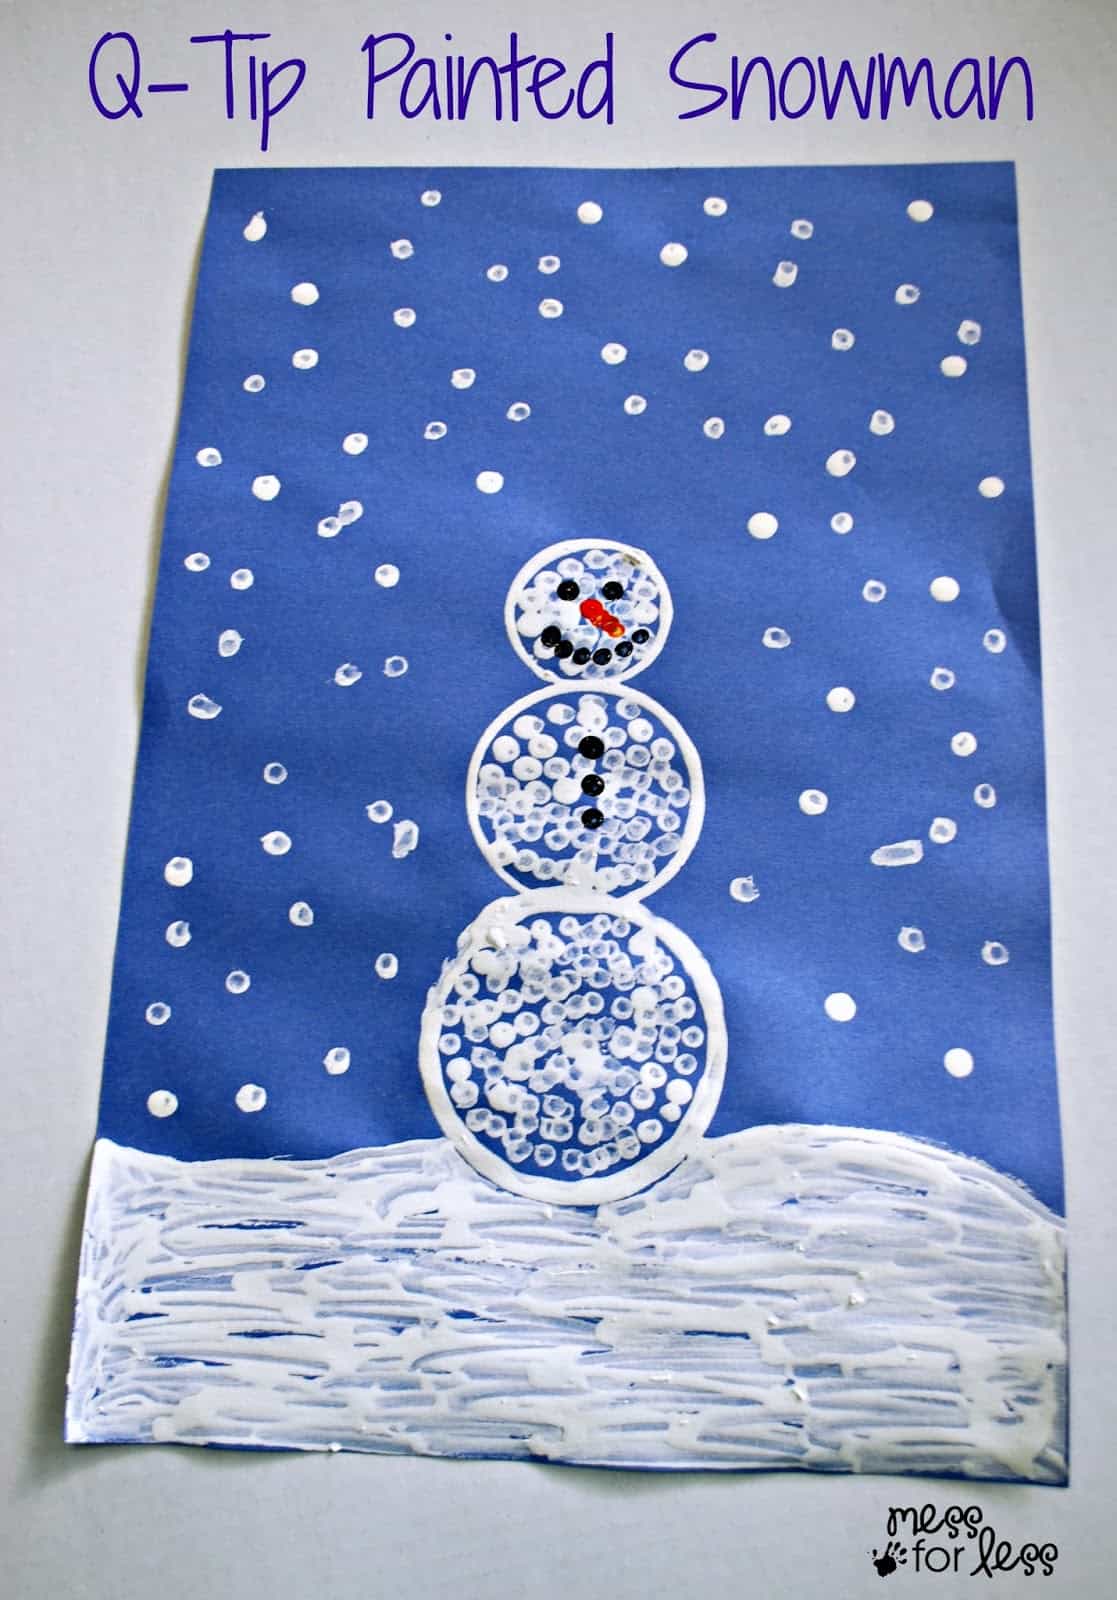 Q-Tip painted snowman